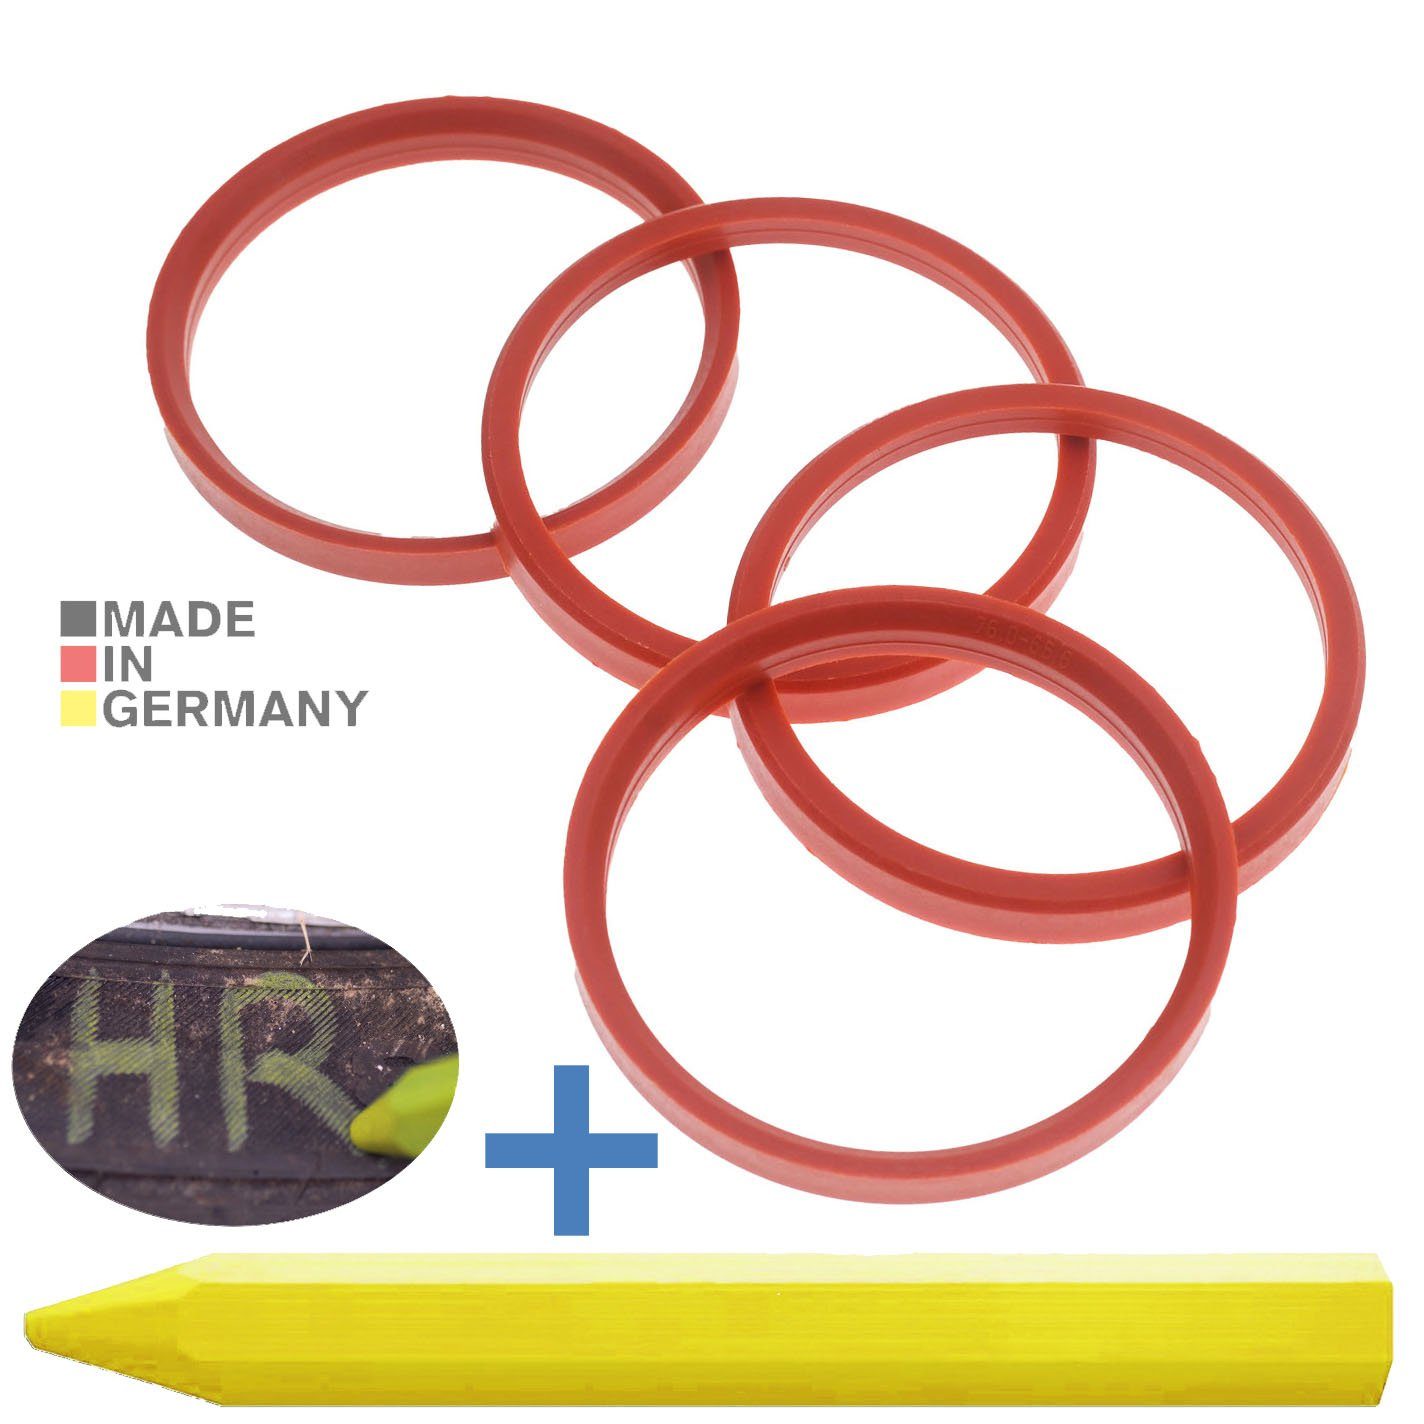 RKC Reifenstift 4X Zentrierringe Orange Felgen Ringe + 1x Reifen Kreide Fett Stift, Maße: 76,0 x 66,6 mm